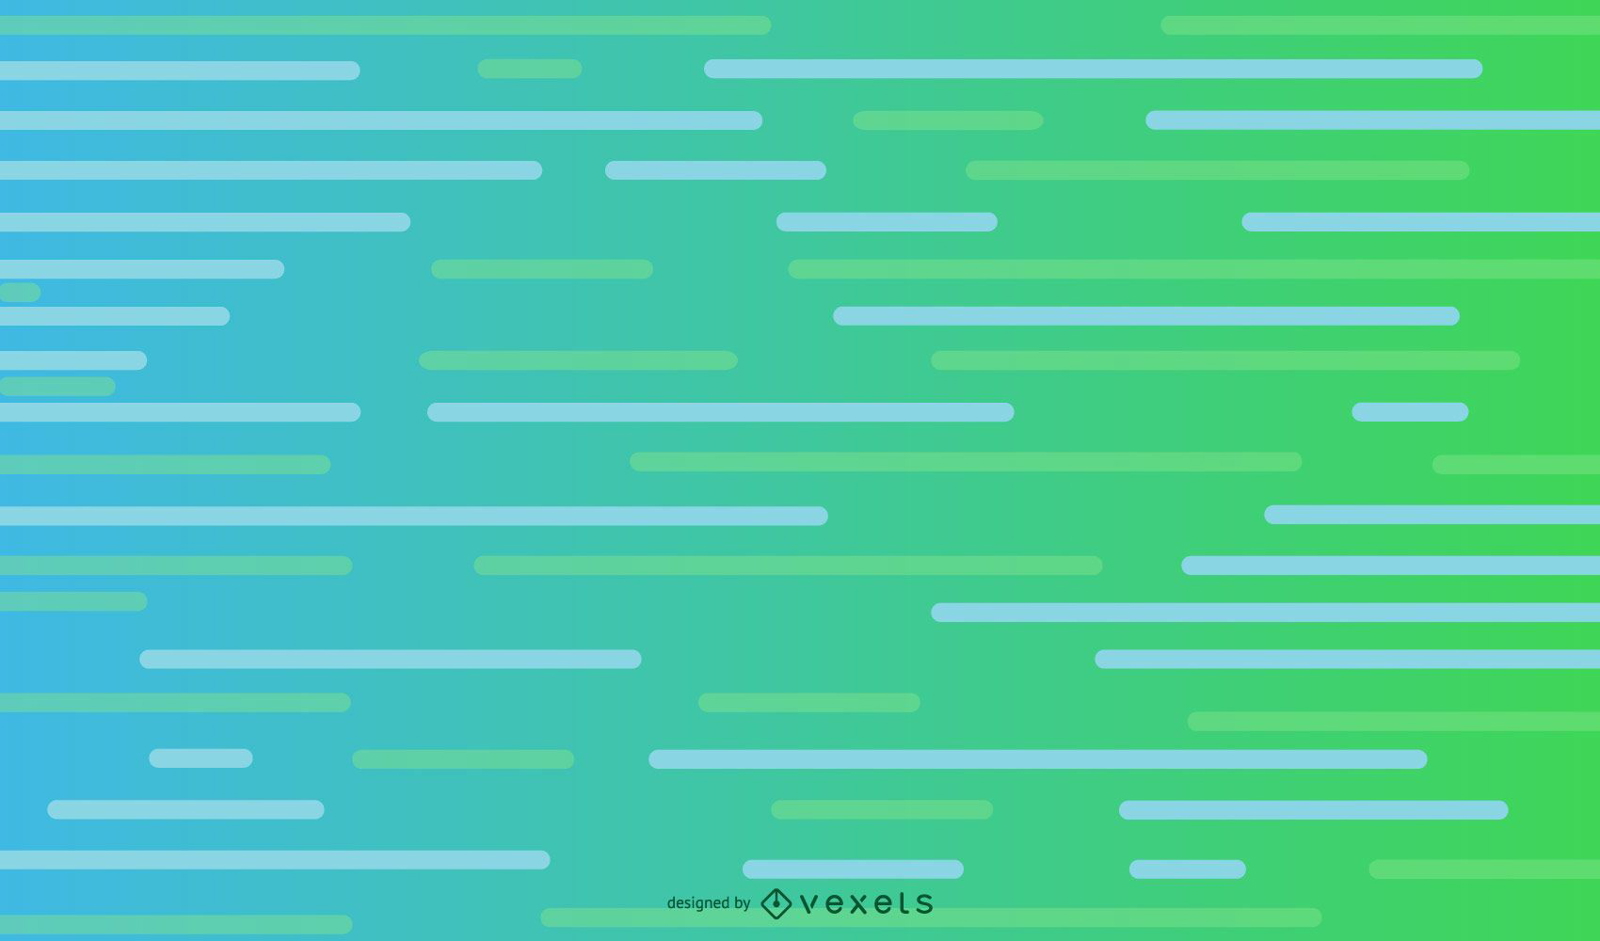 Parallel lines green background design